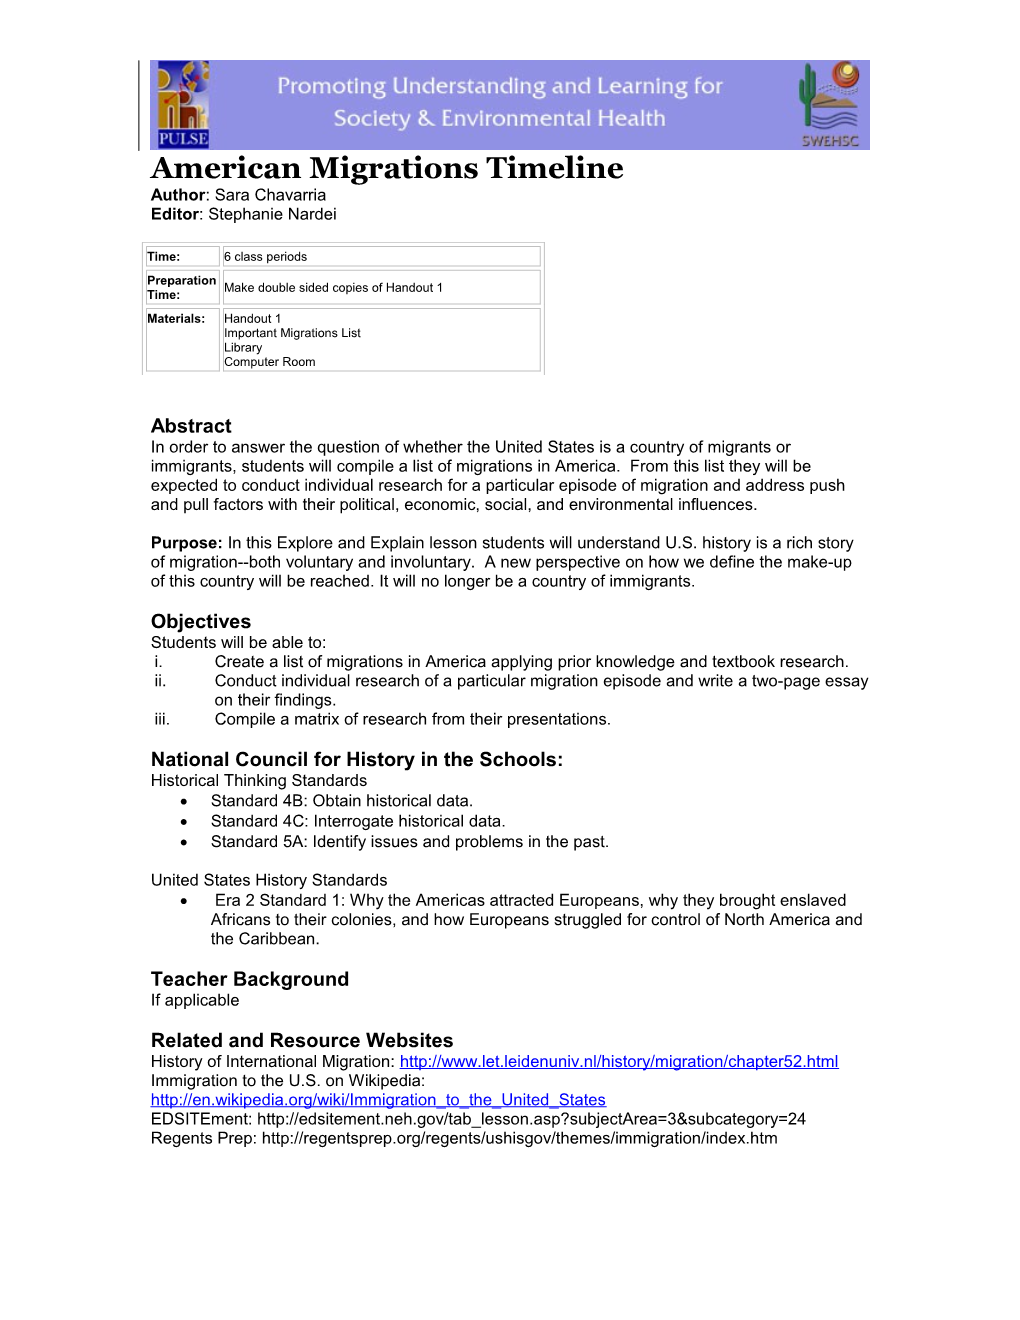 American Migrations Timeline